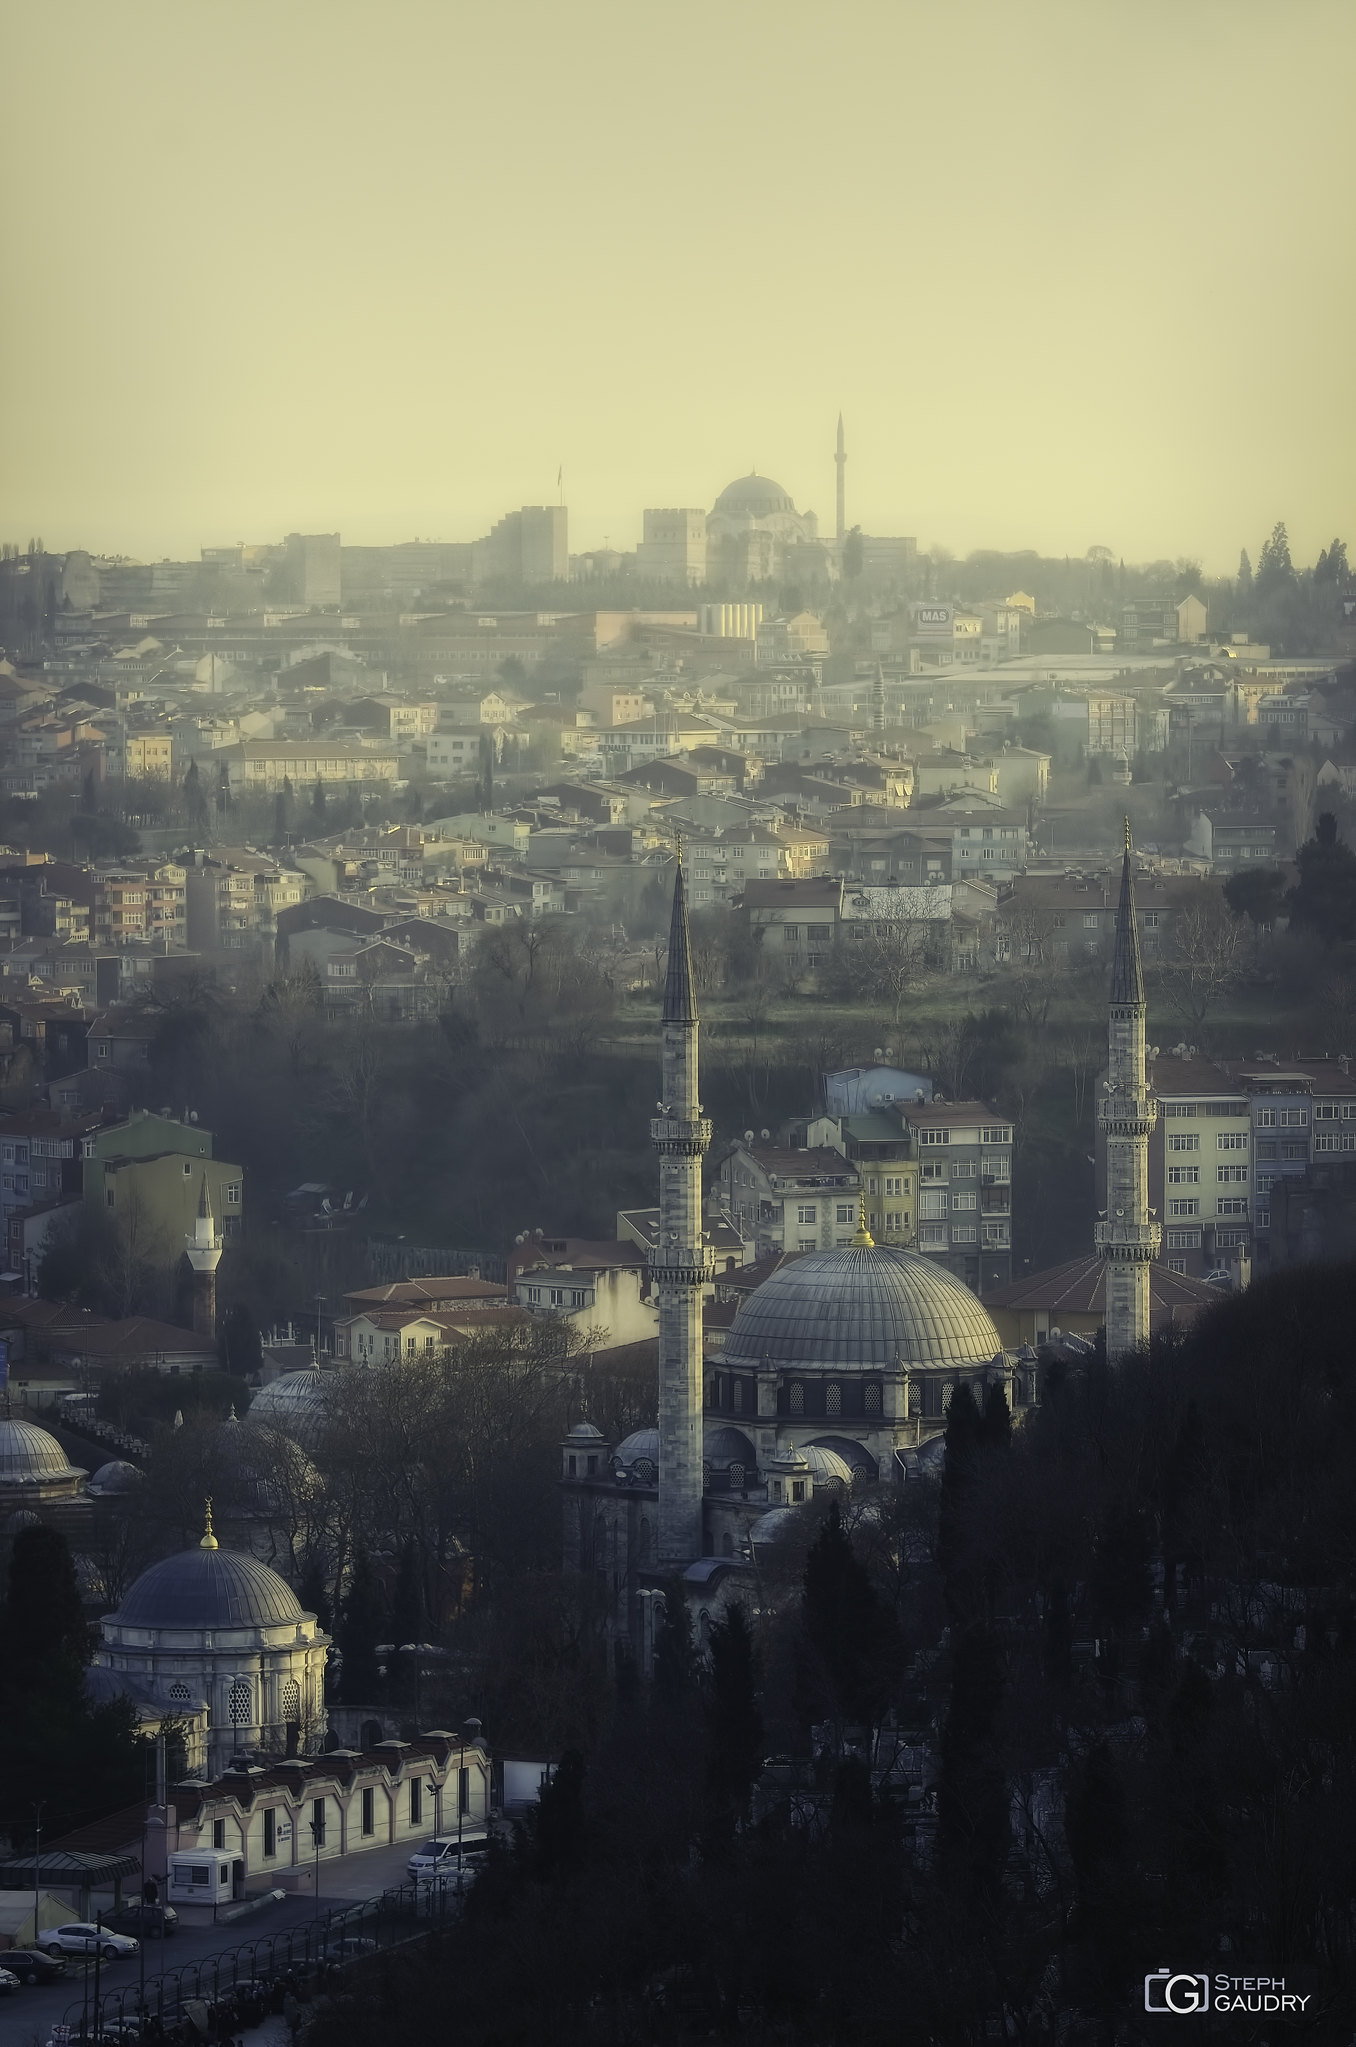 Mosquée d'Eyüp (Eyüp Sultan Camii) – Istanbul [Klik om de diavoorstelling te starten]